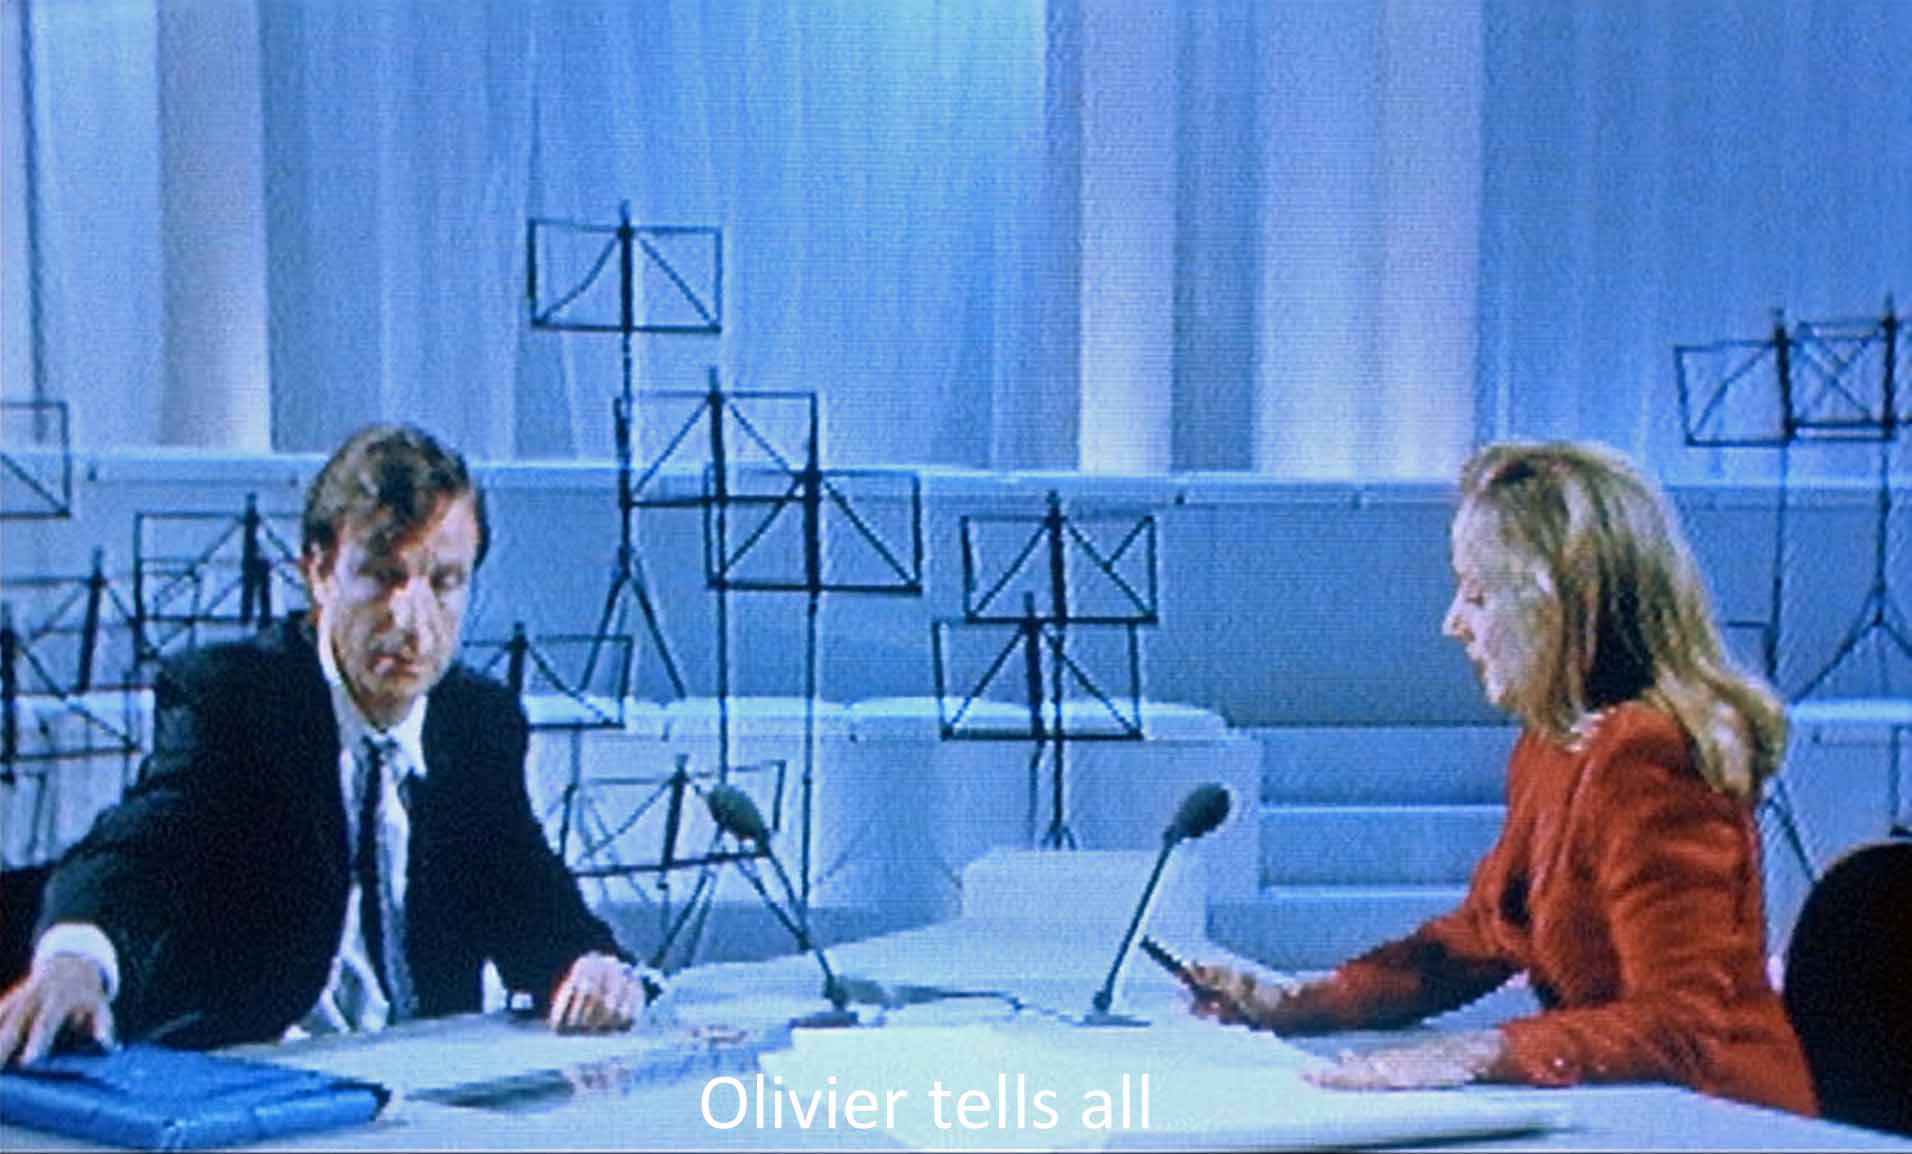 Olivier tells all